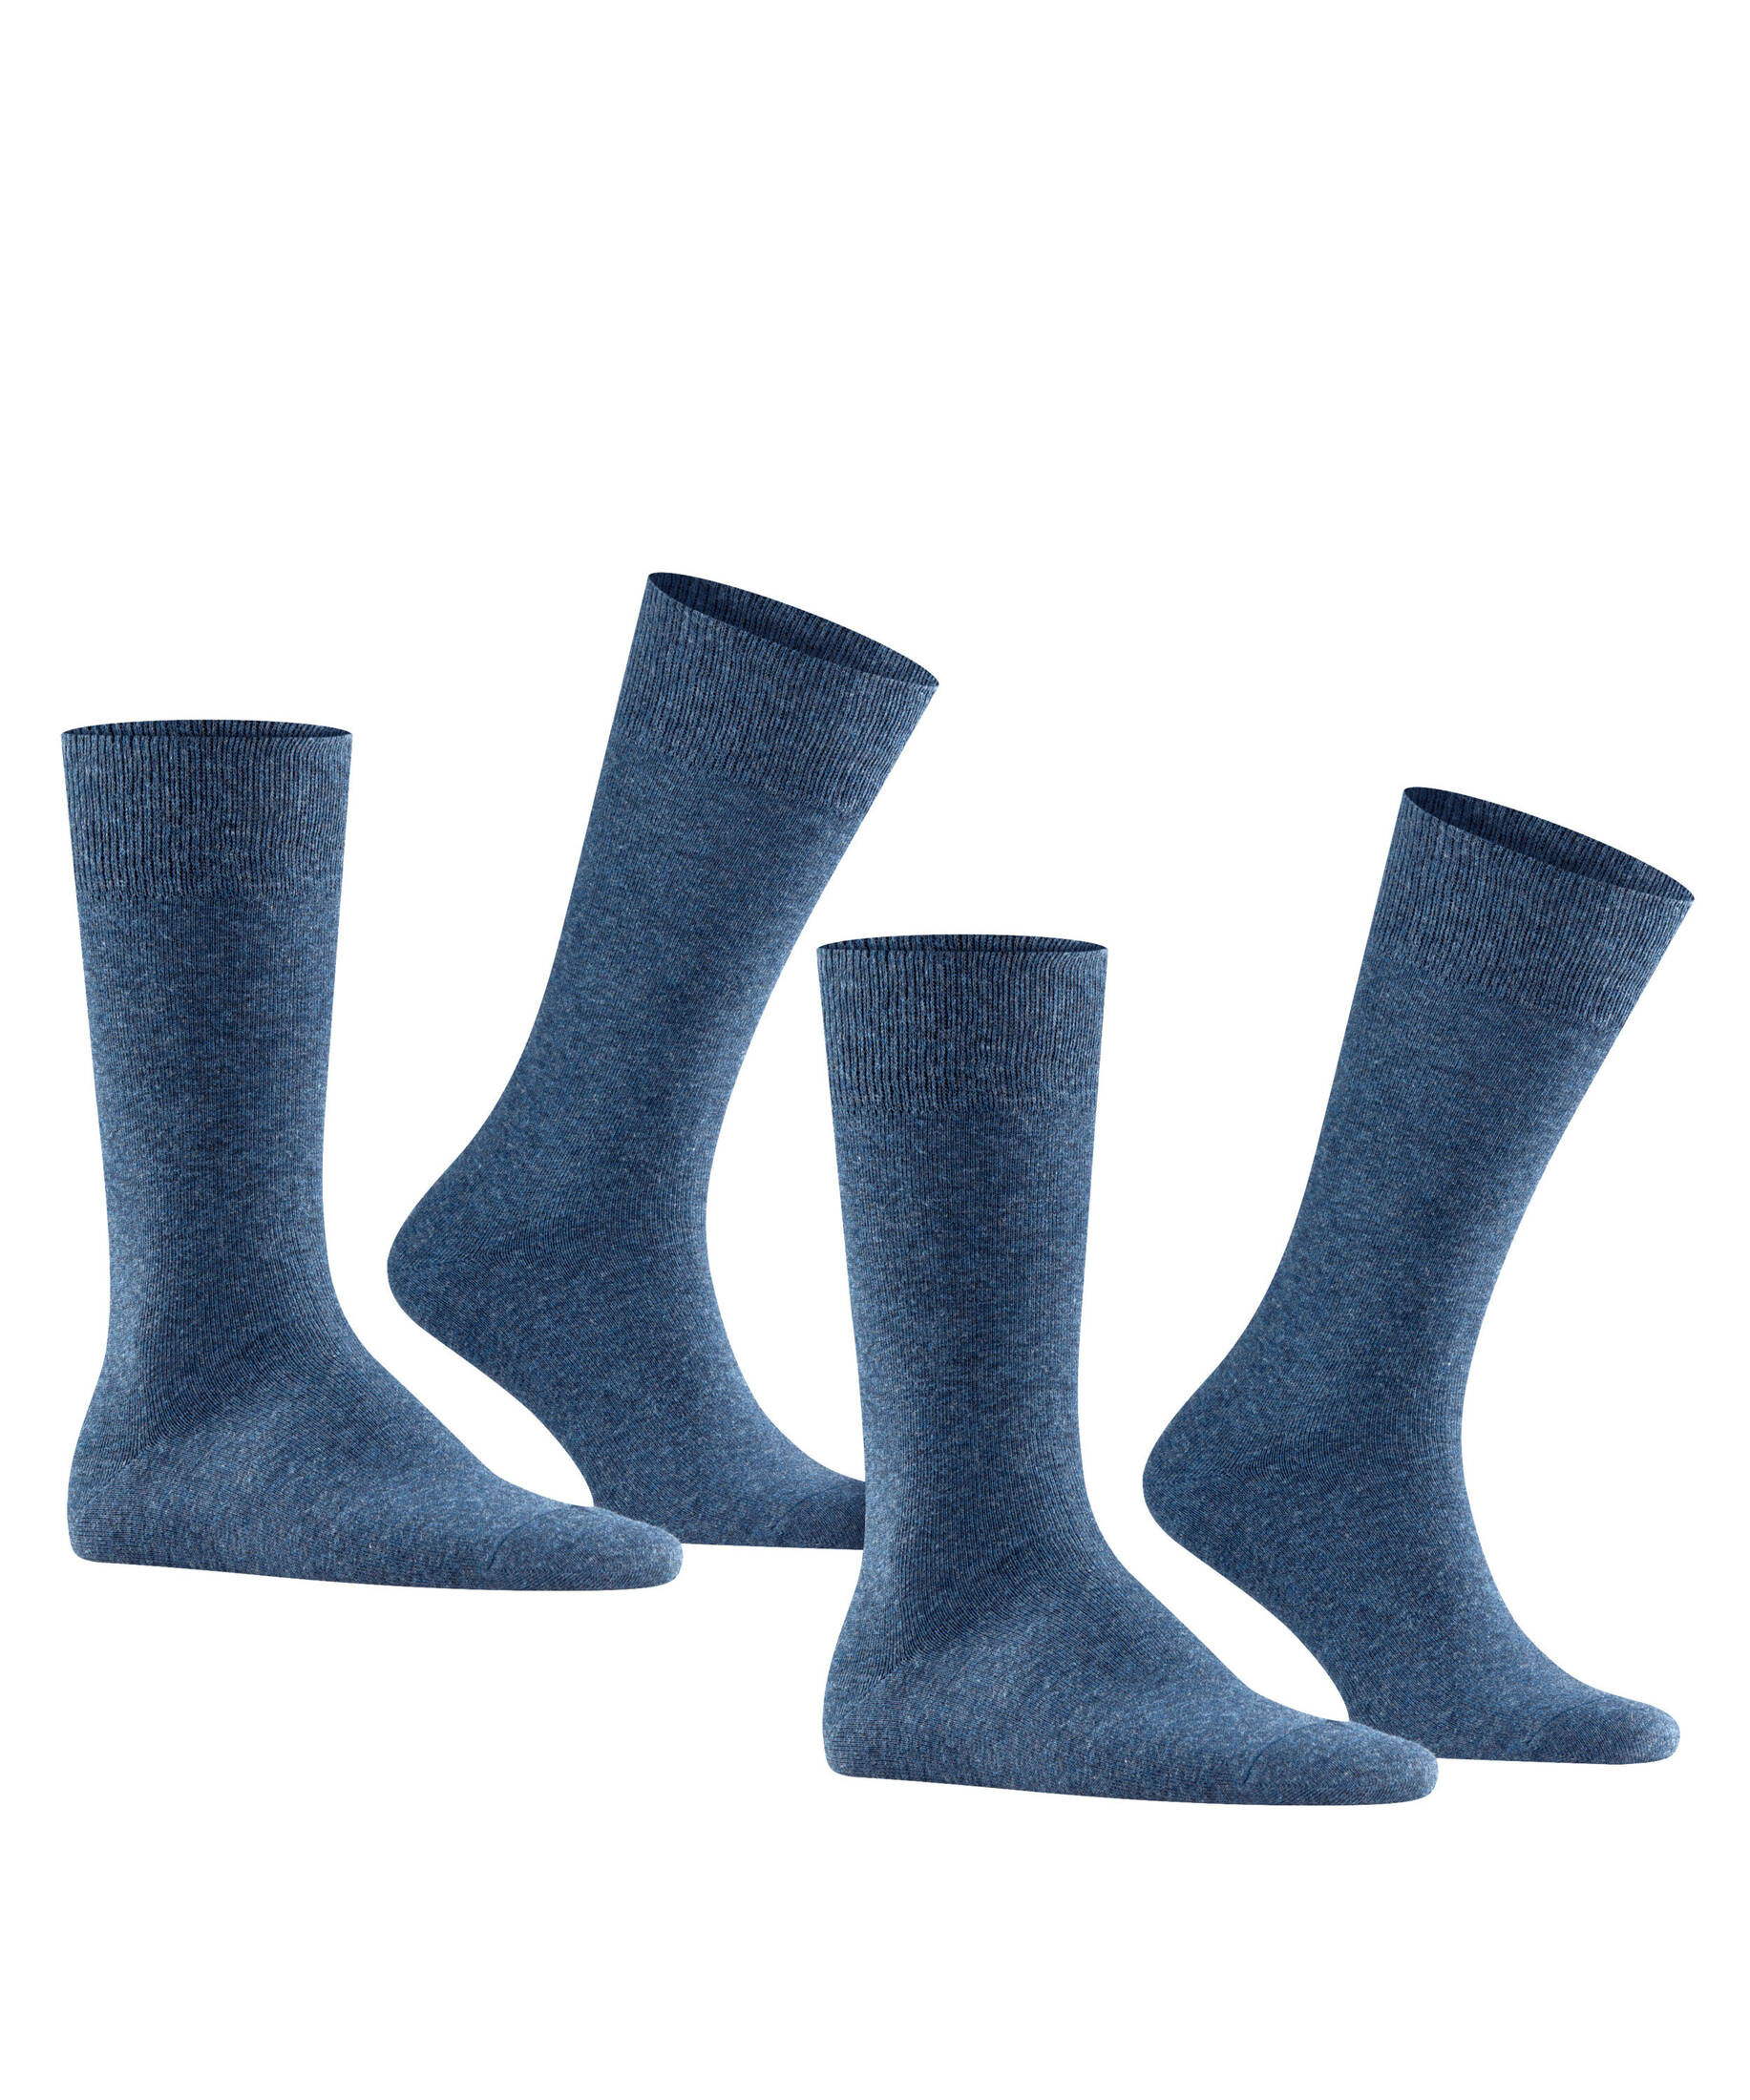 Falke Doppelpack Socke Swing marine blau 14633-6370 Basic Baumwolle 